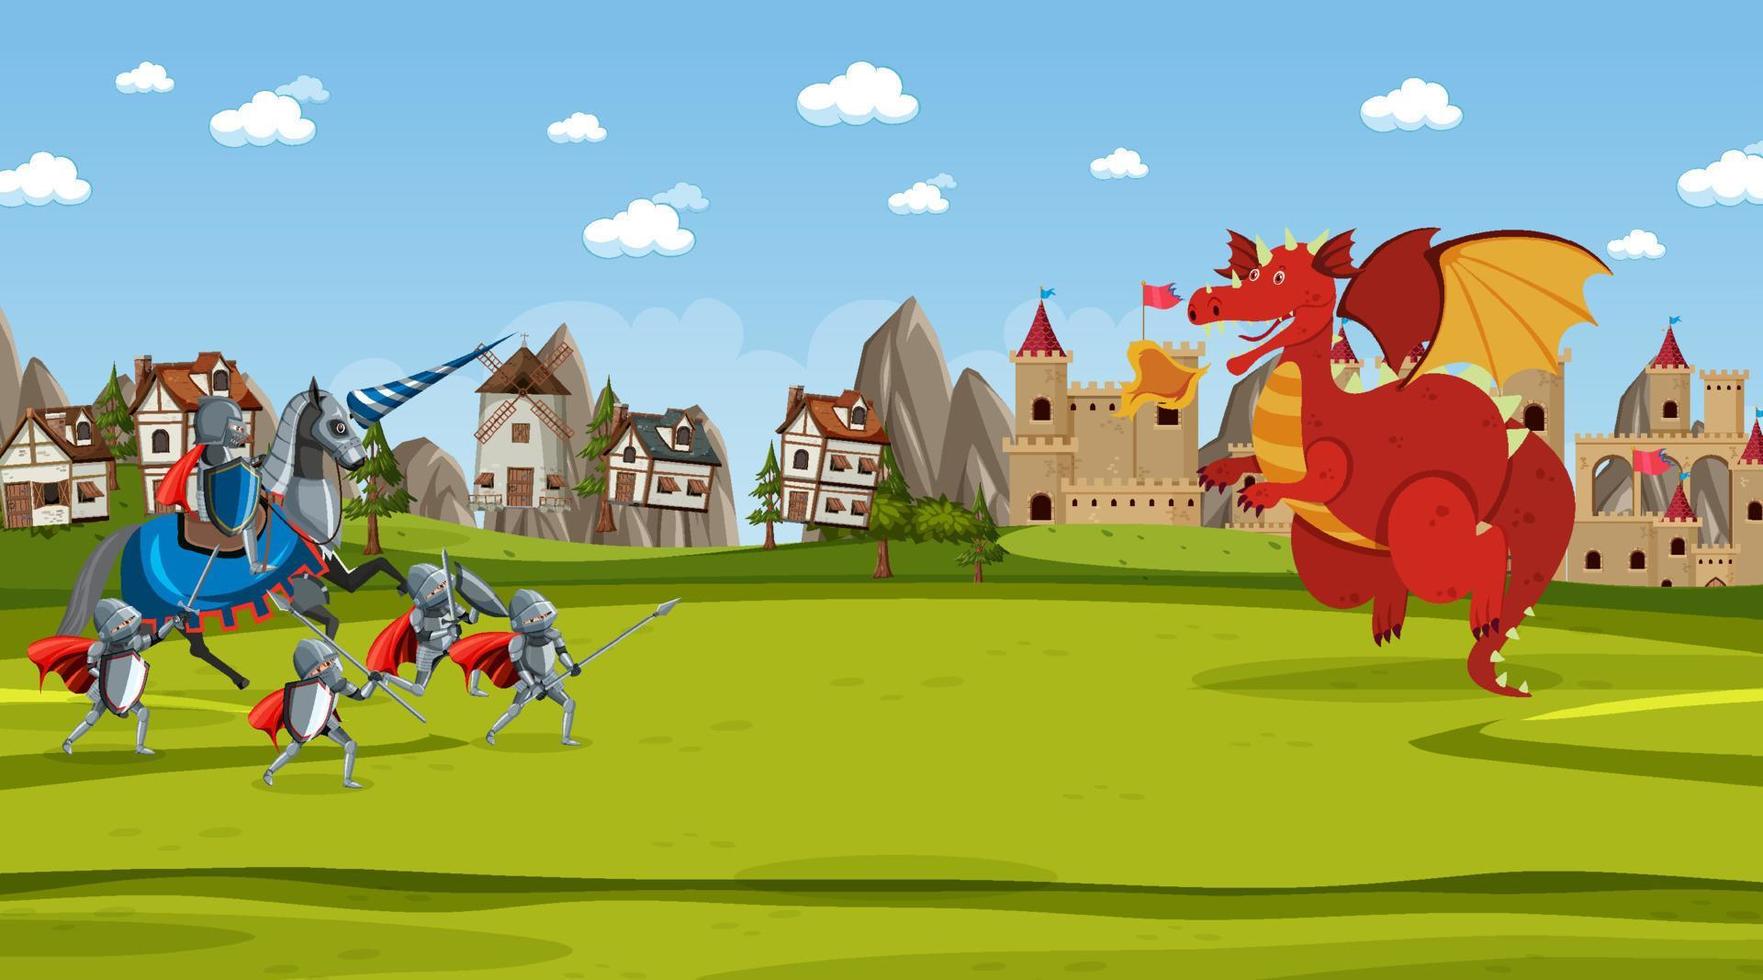 Medieval battle scene in cartoon style vector